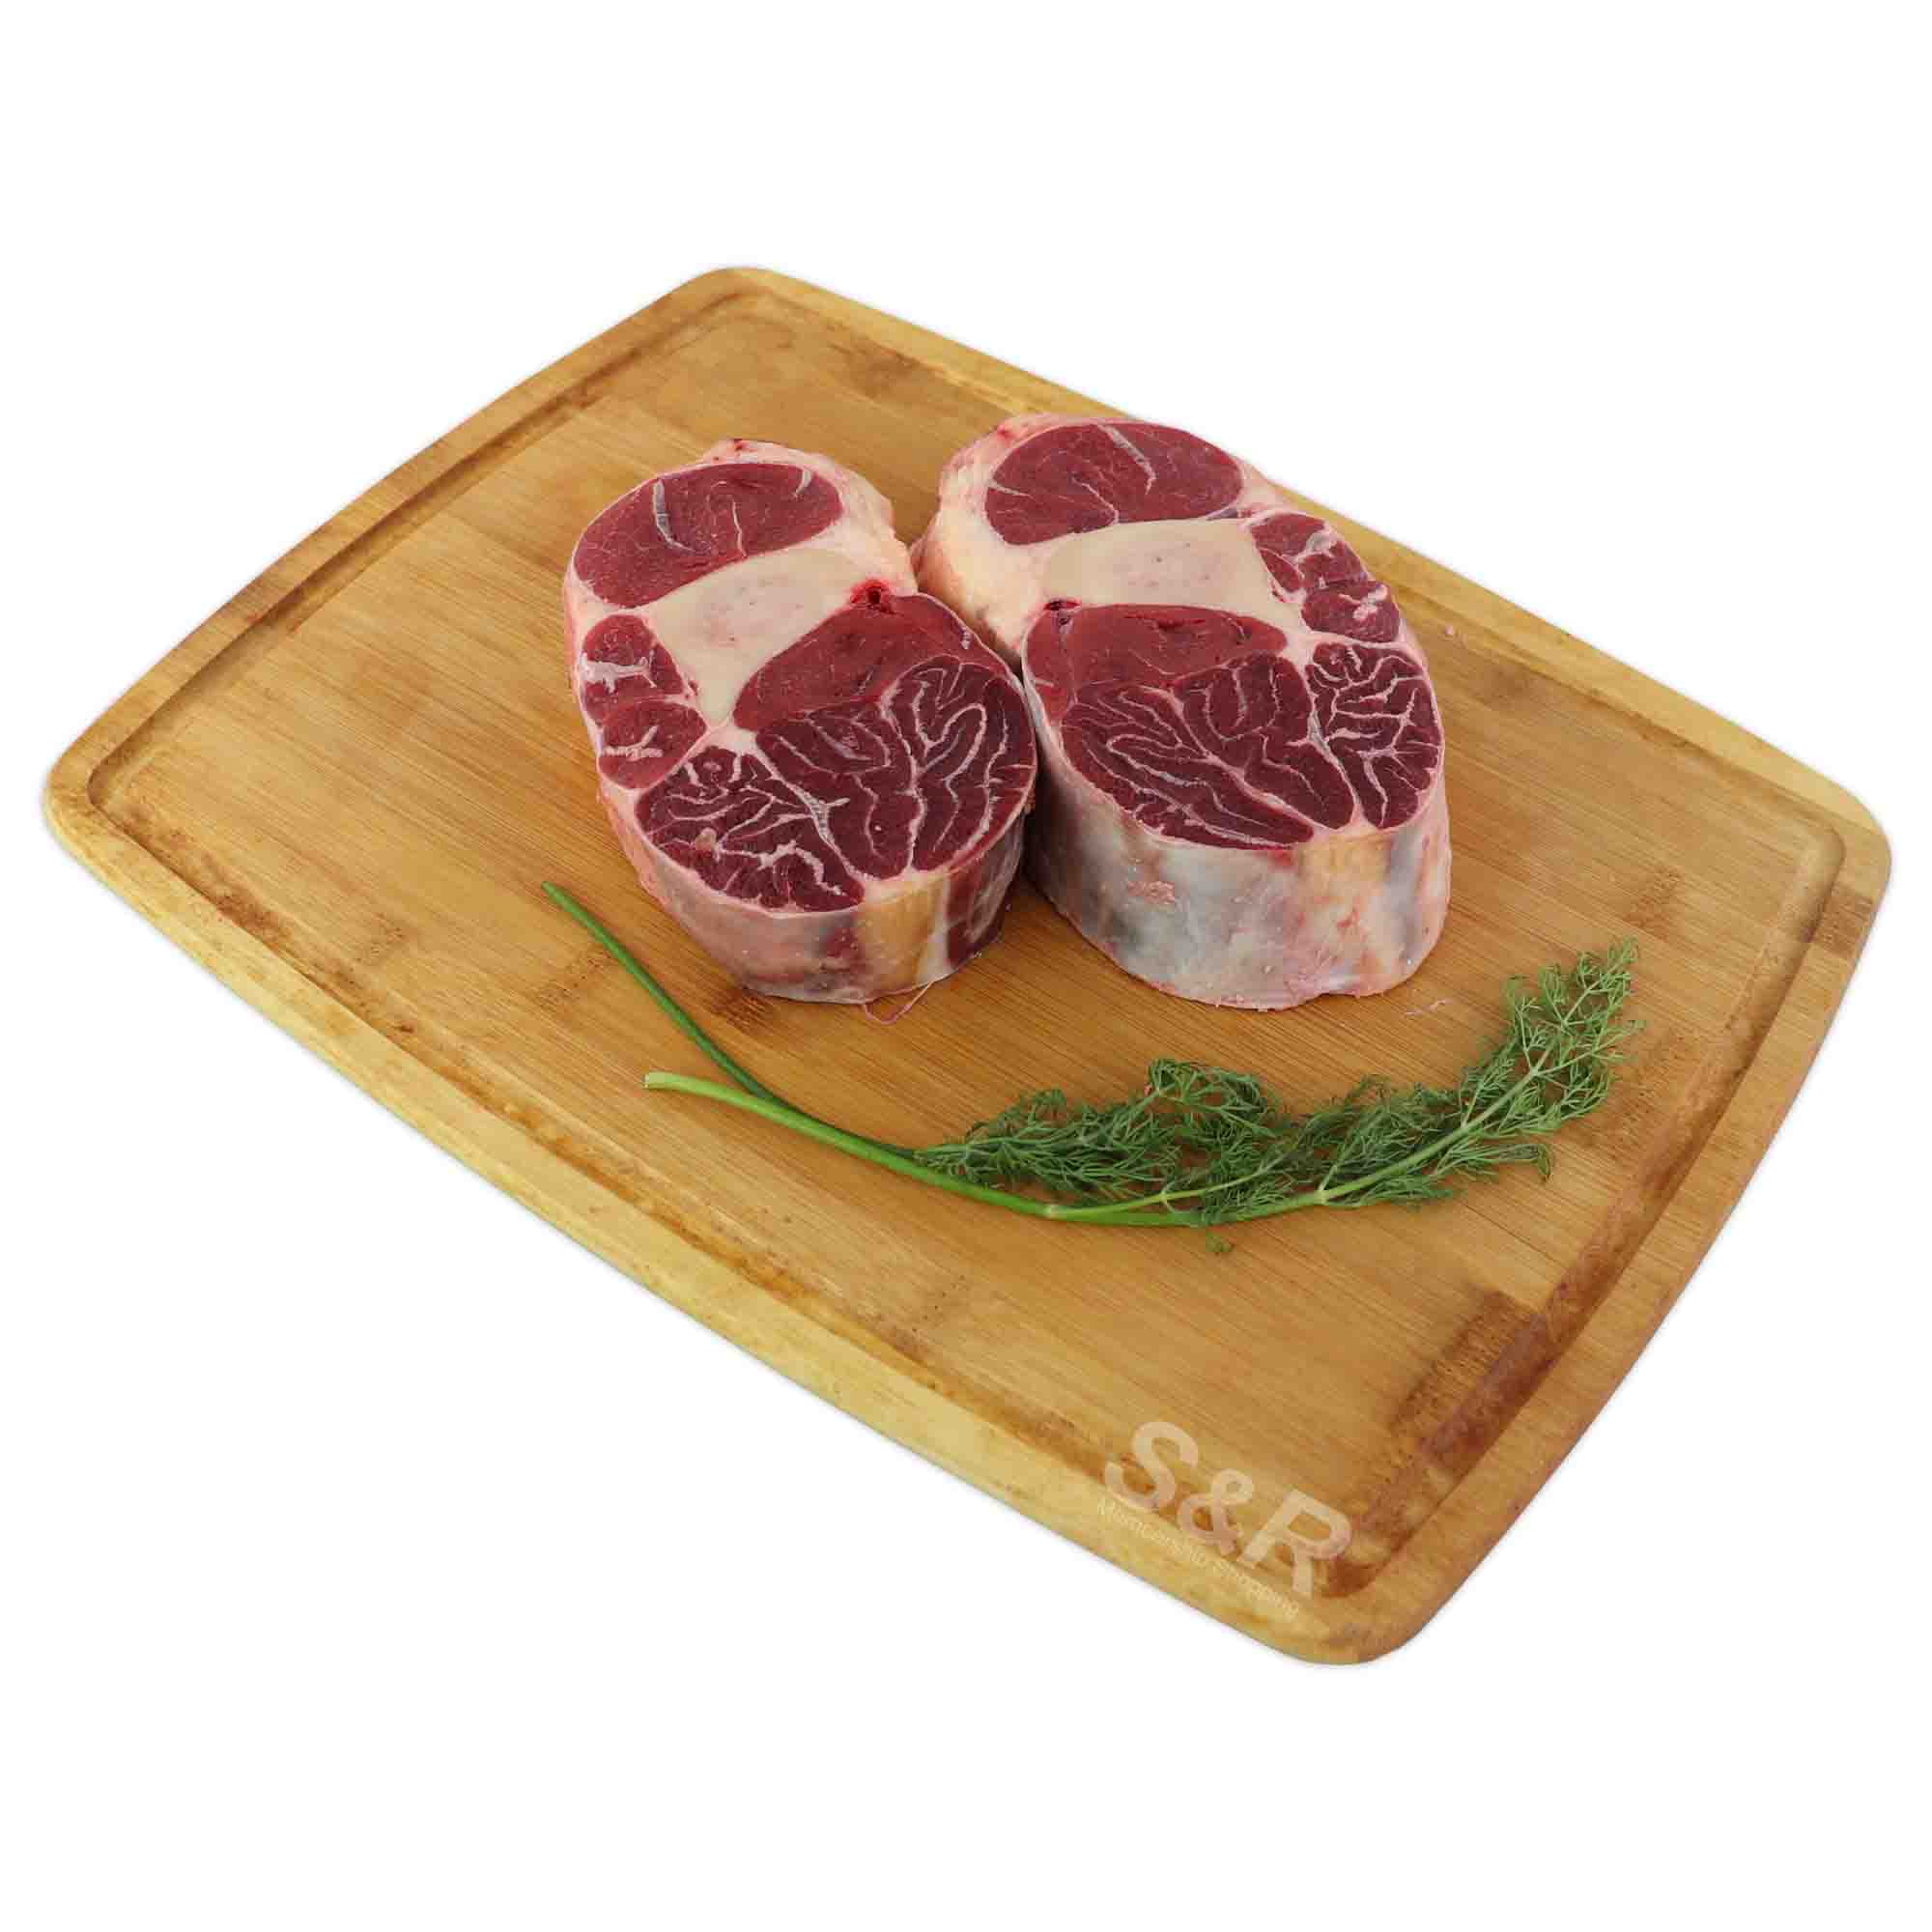 Members' Value Beef Shank approx. 2kg